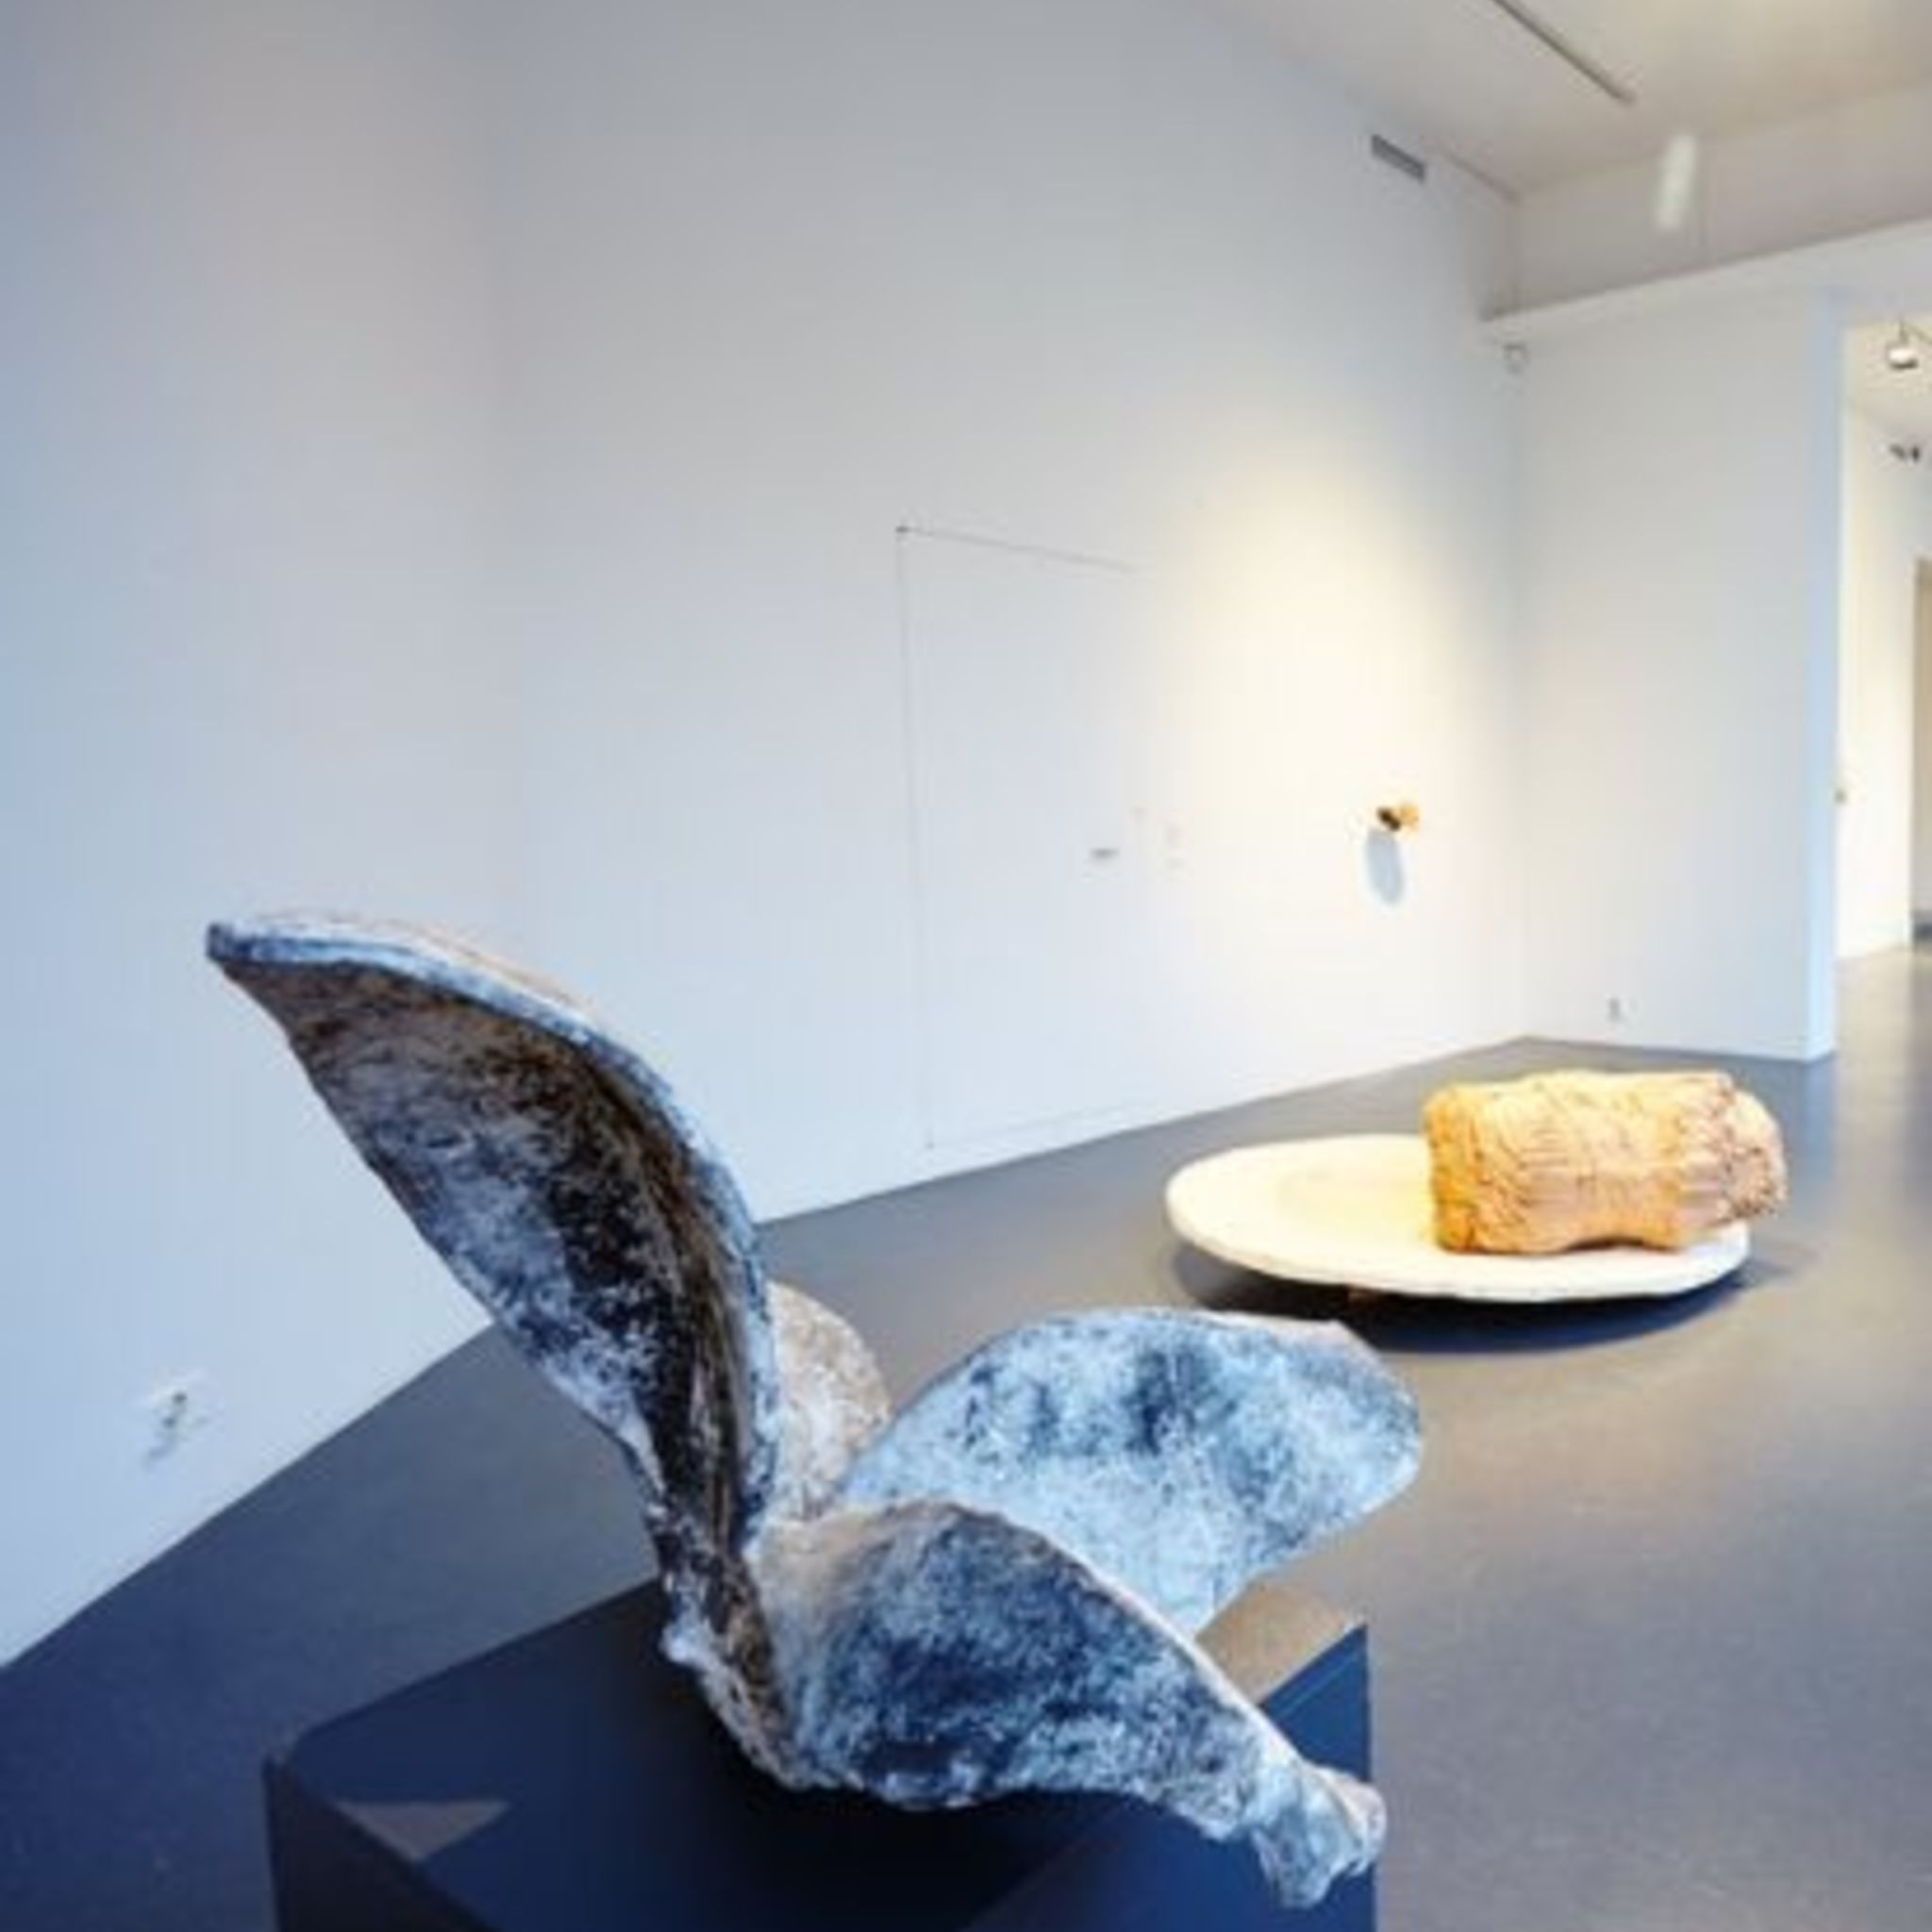 The exhibition Finnish modernism